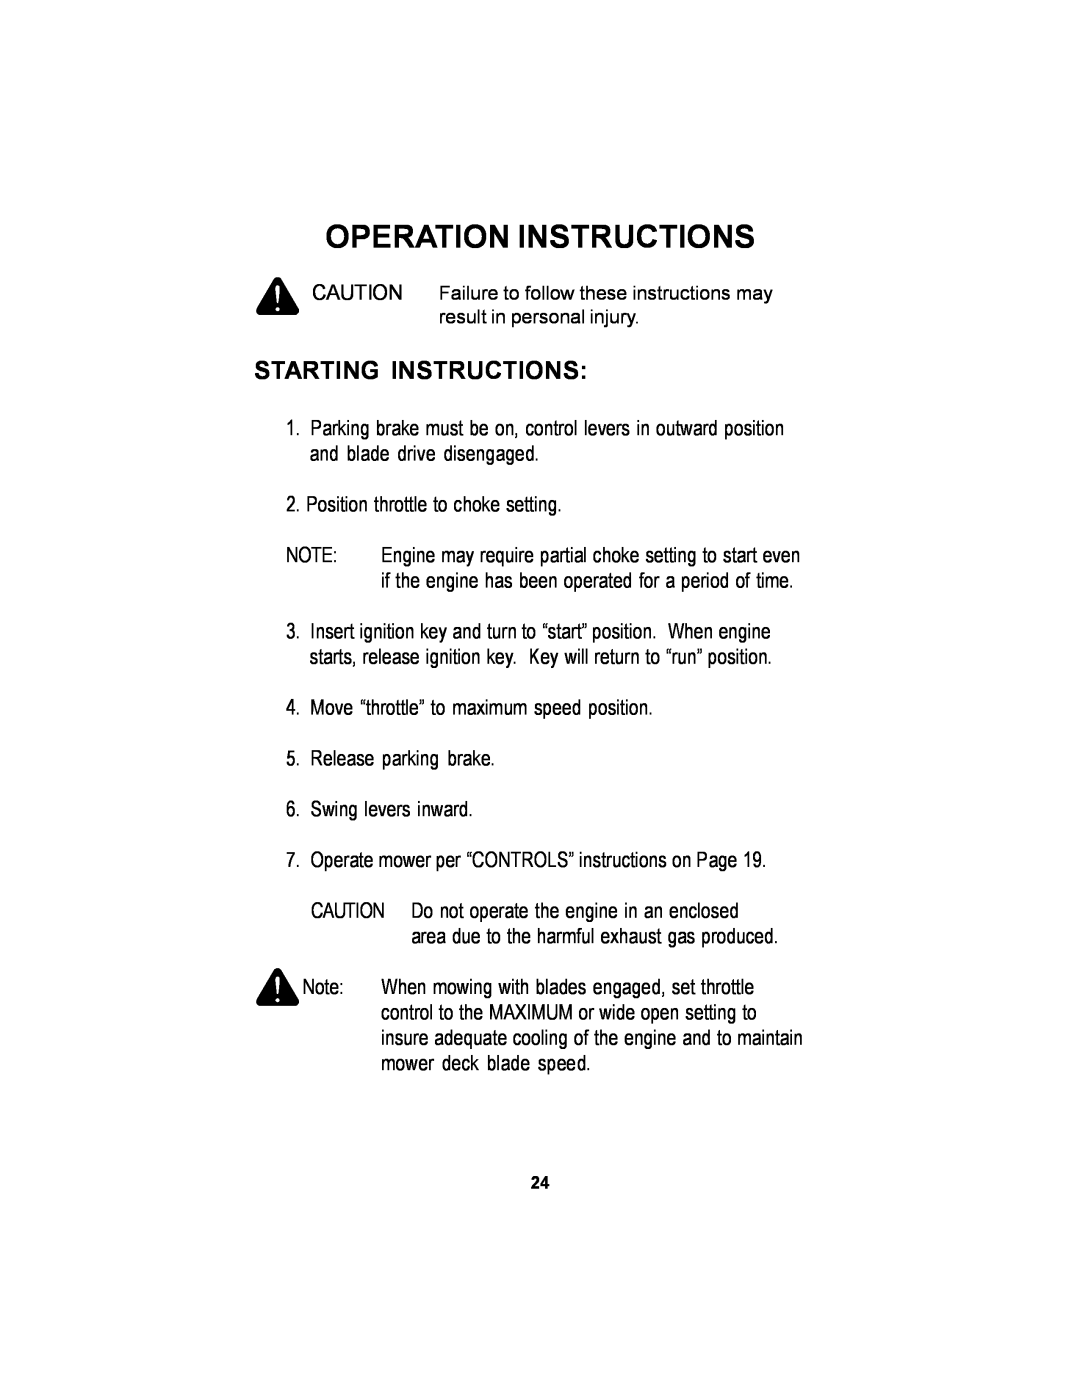 Dixon 36 manual Starting Instructions, Operation Instructions 